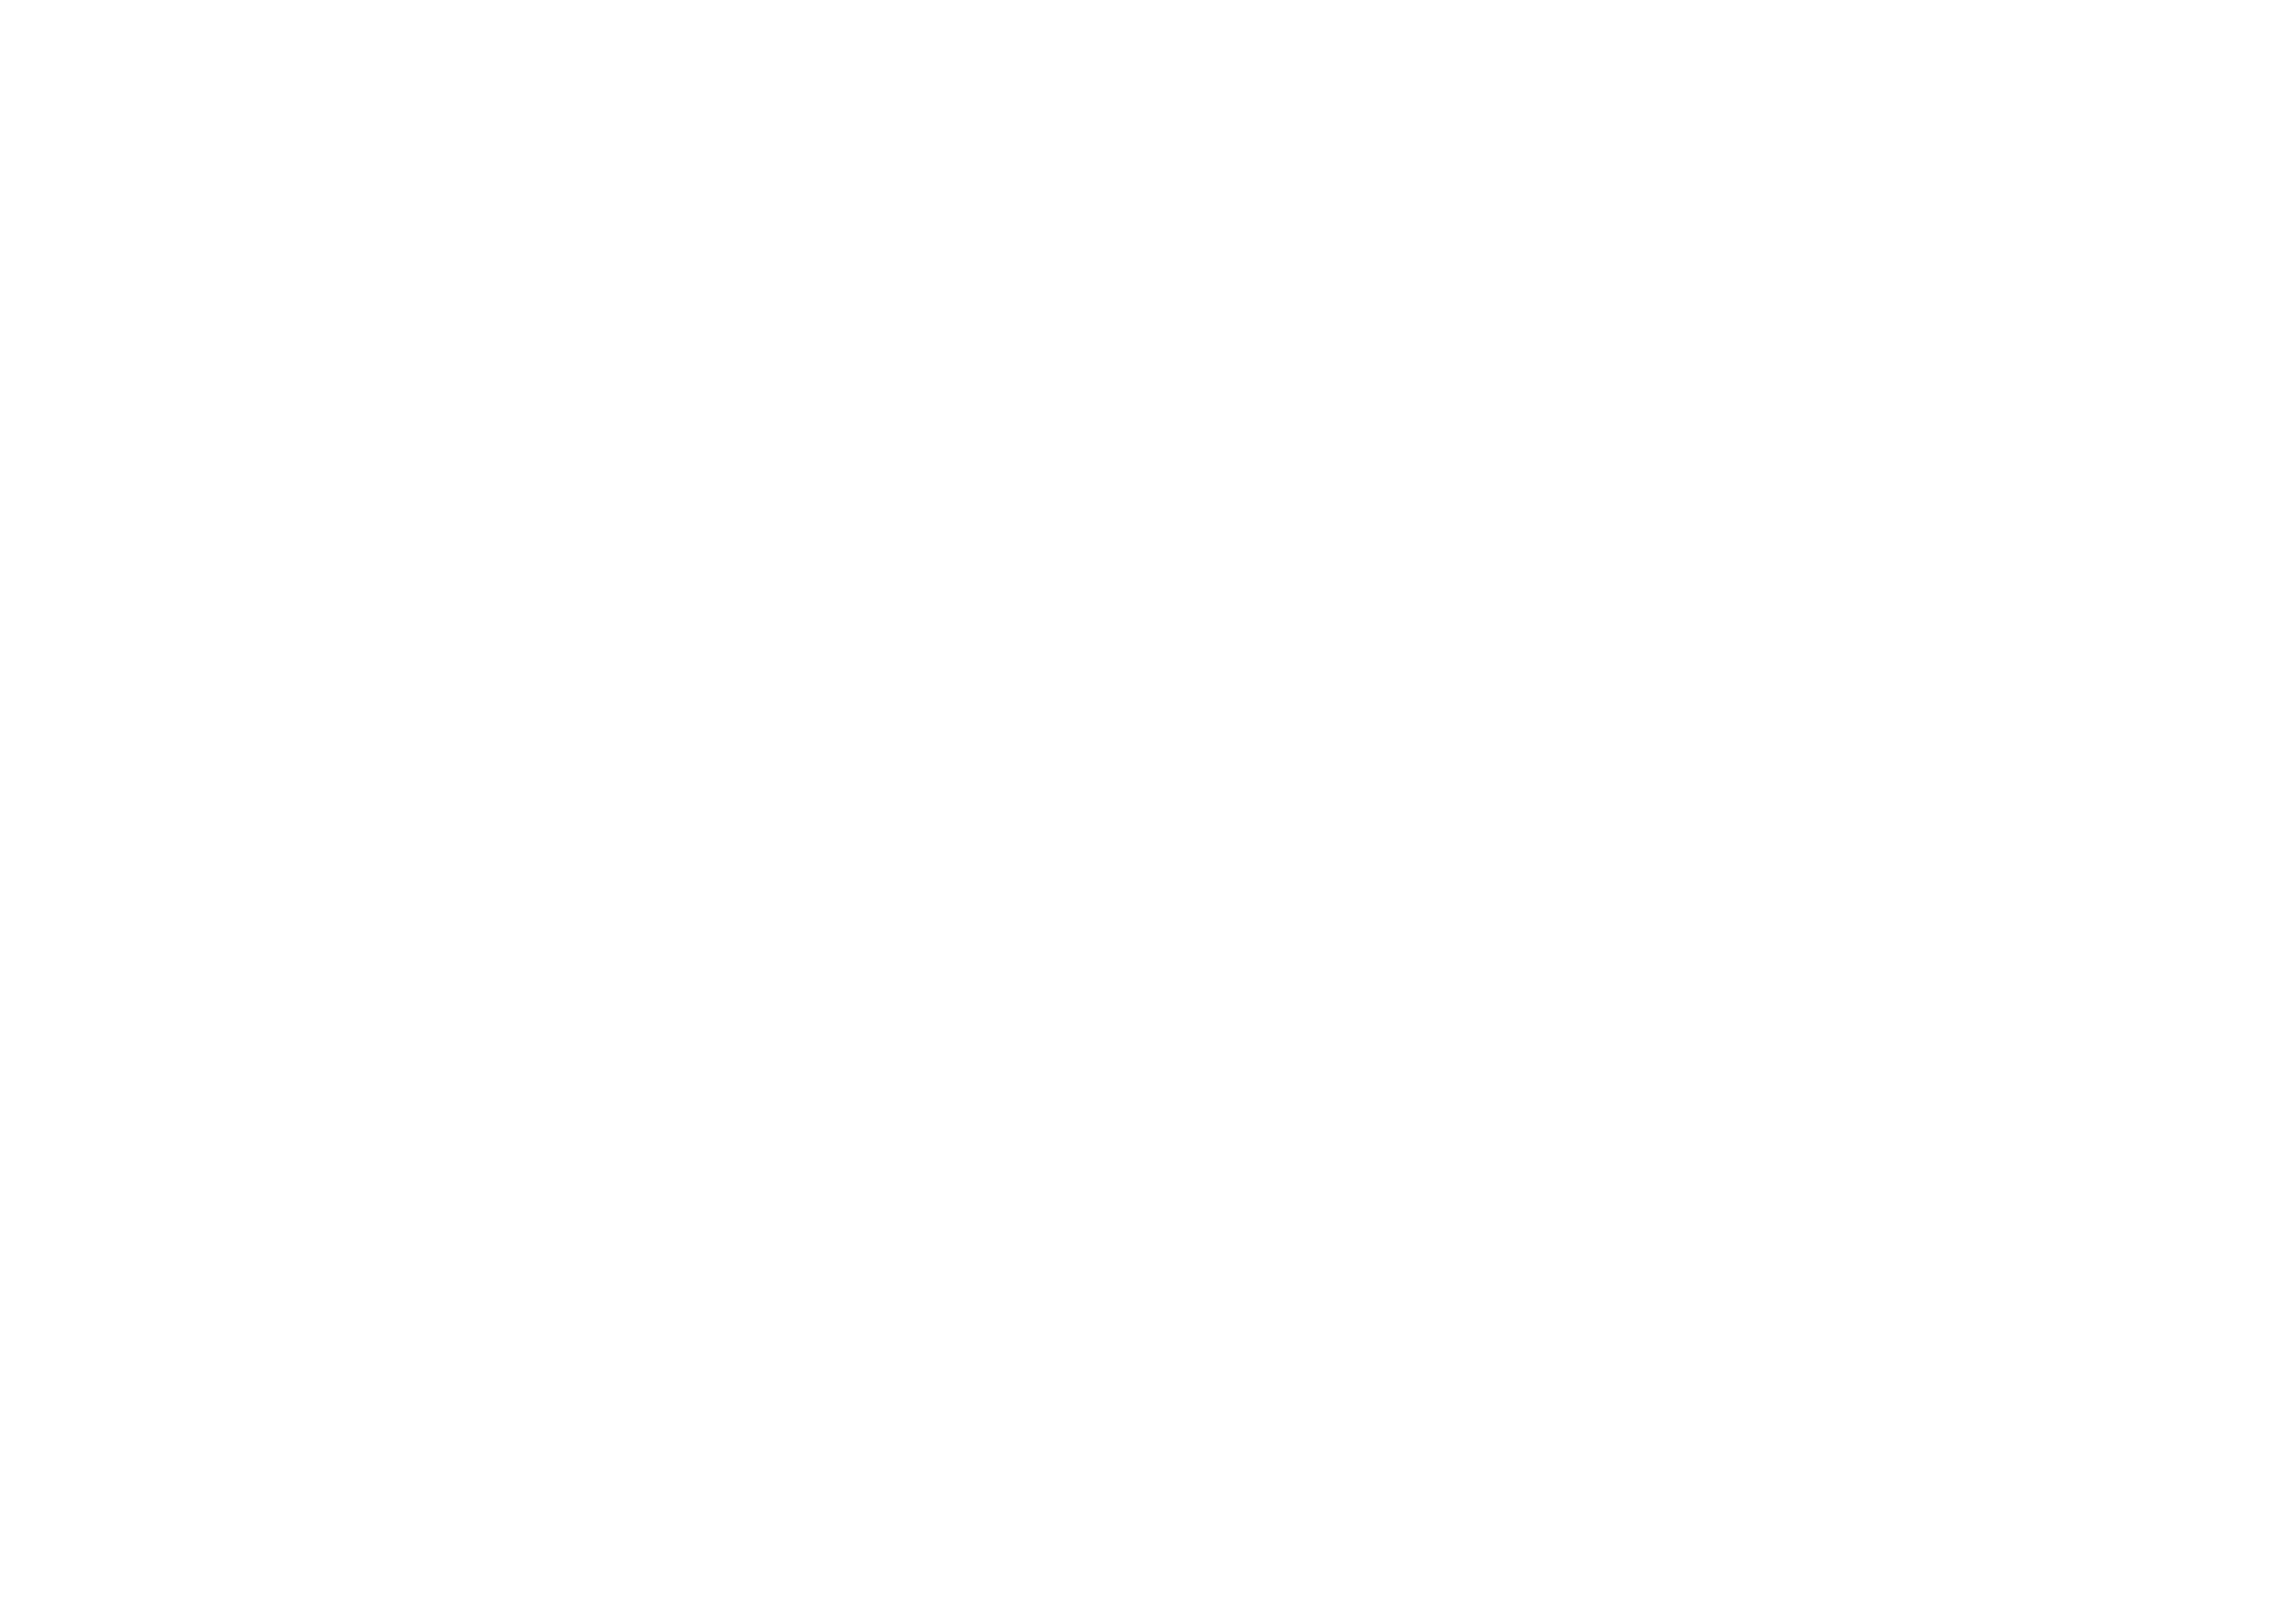 Studio Scarabelli